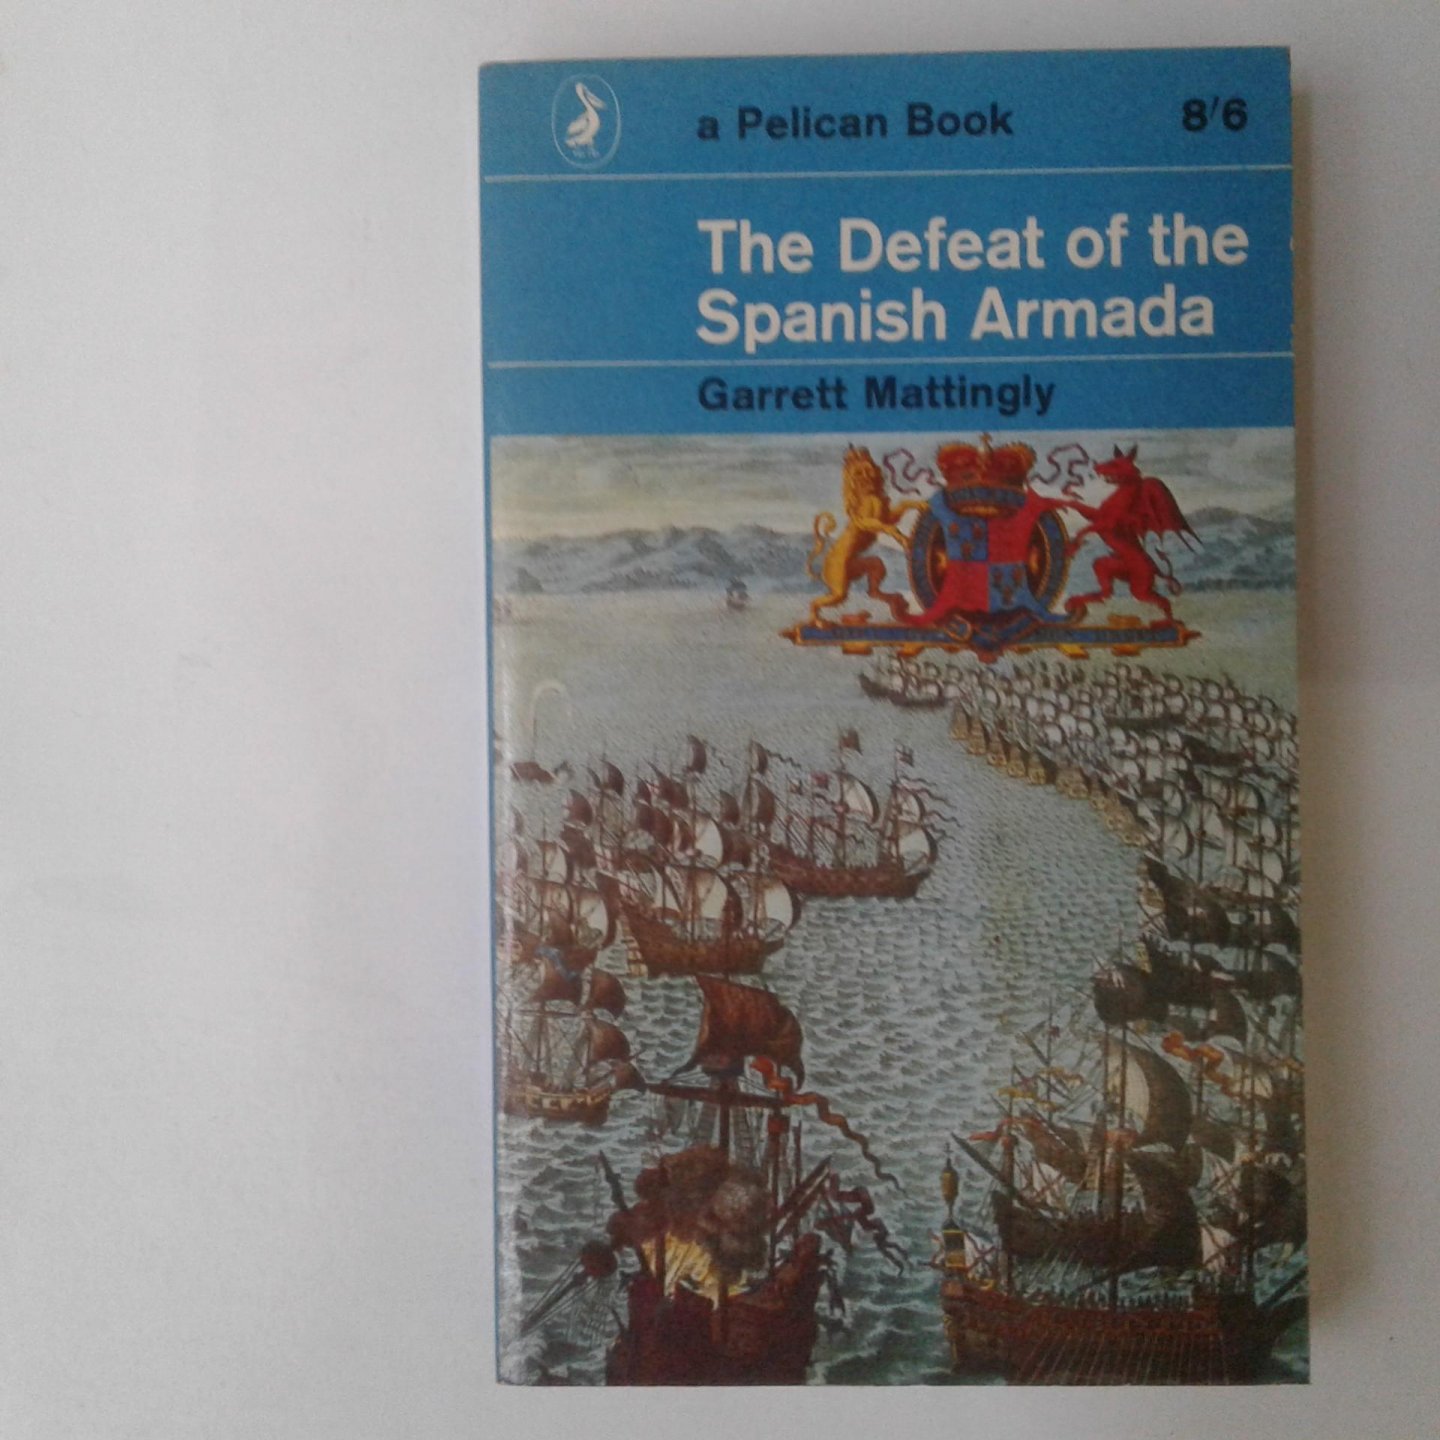 Mattingly, Garrett - The Defeat of the Spanish Armada